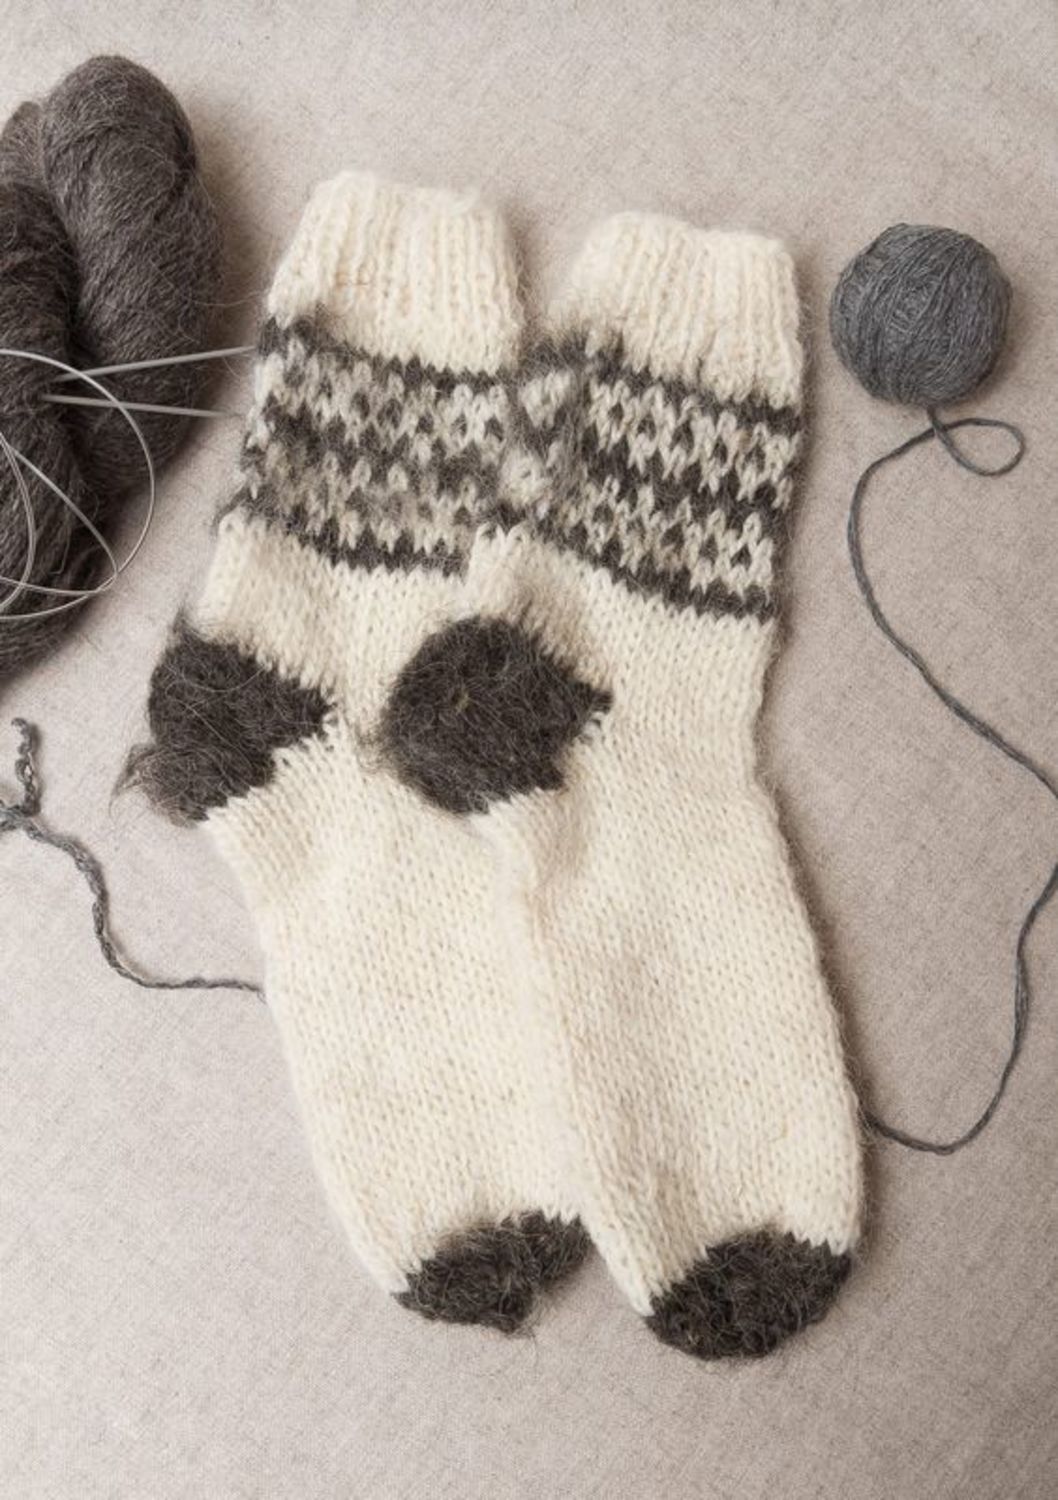 Woolen socks for men photo 1